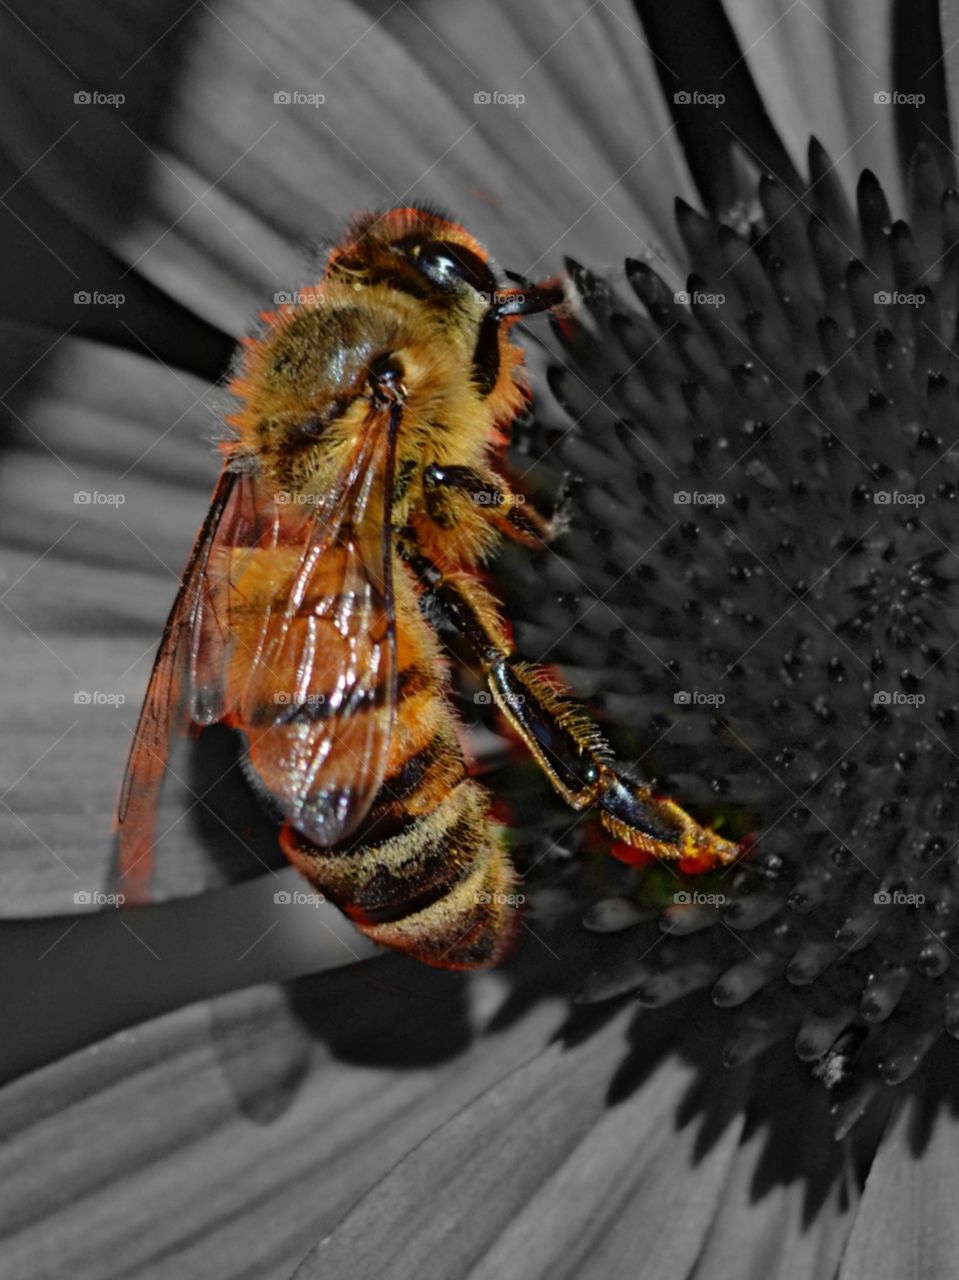 Honeybee on coneflower